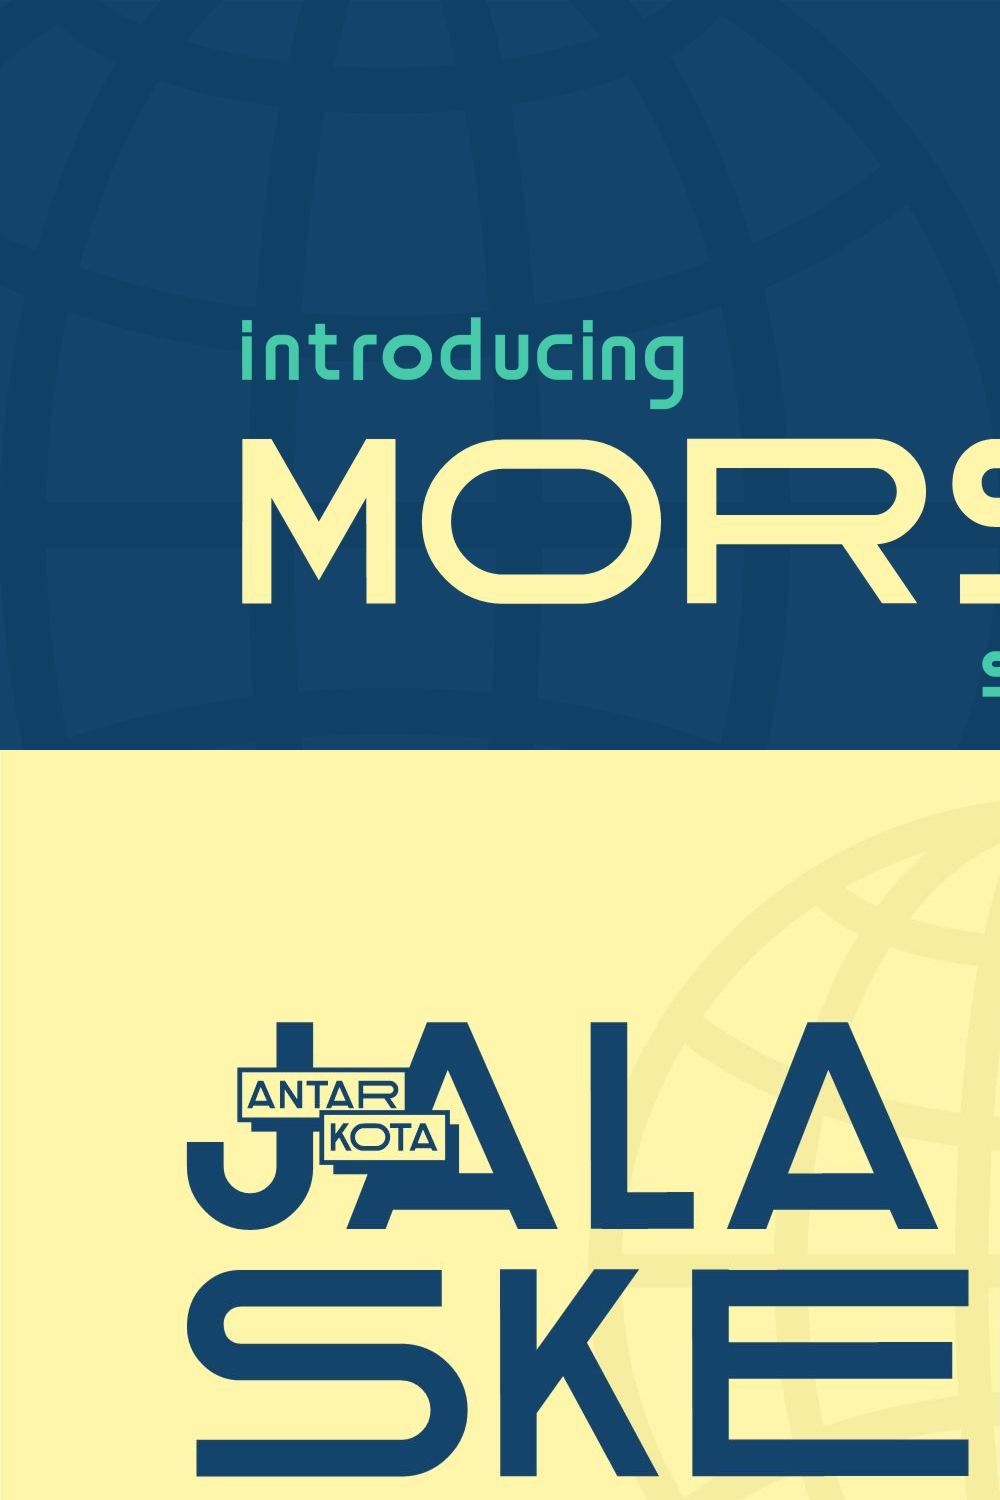 Morsa - Modern Space Font pinterest preview image.